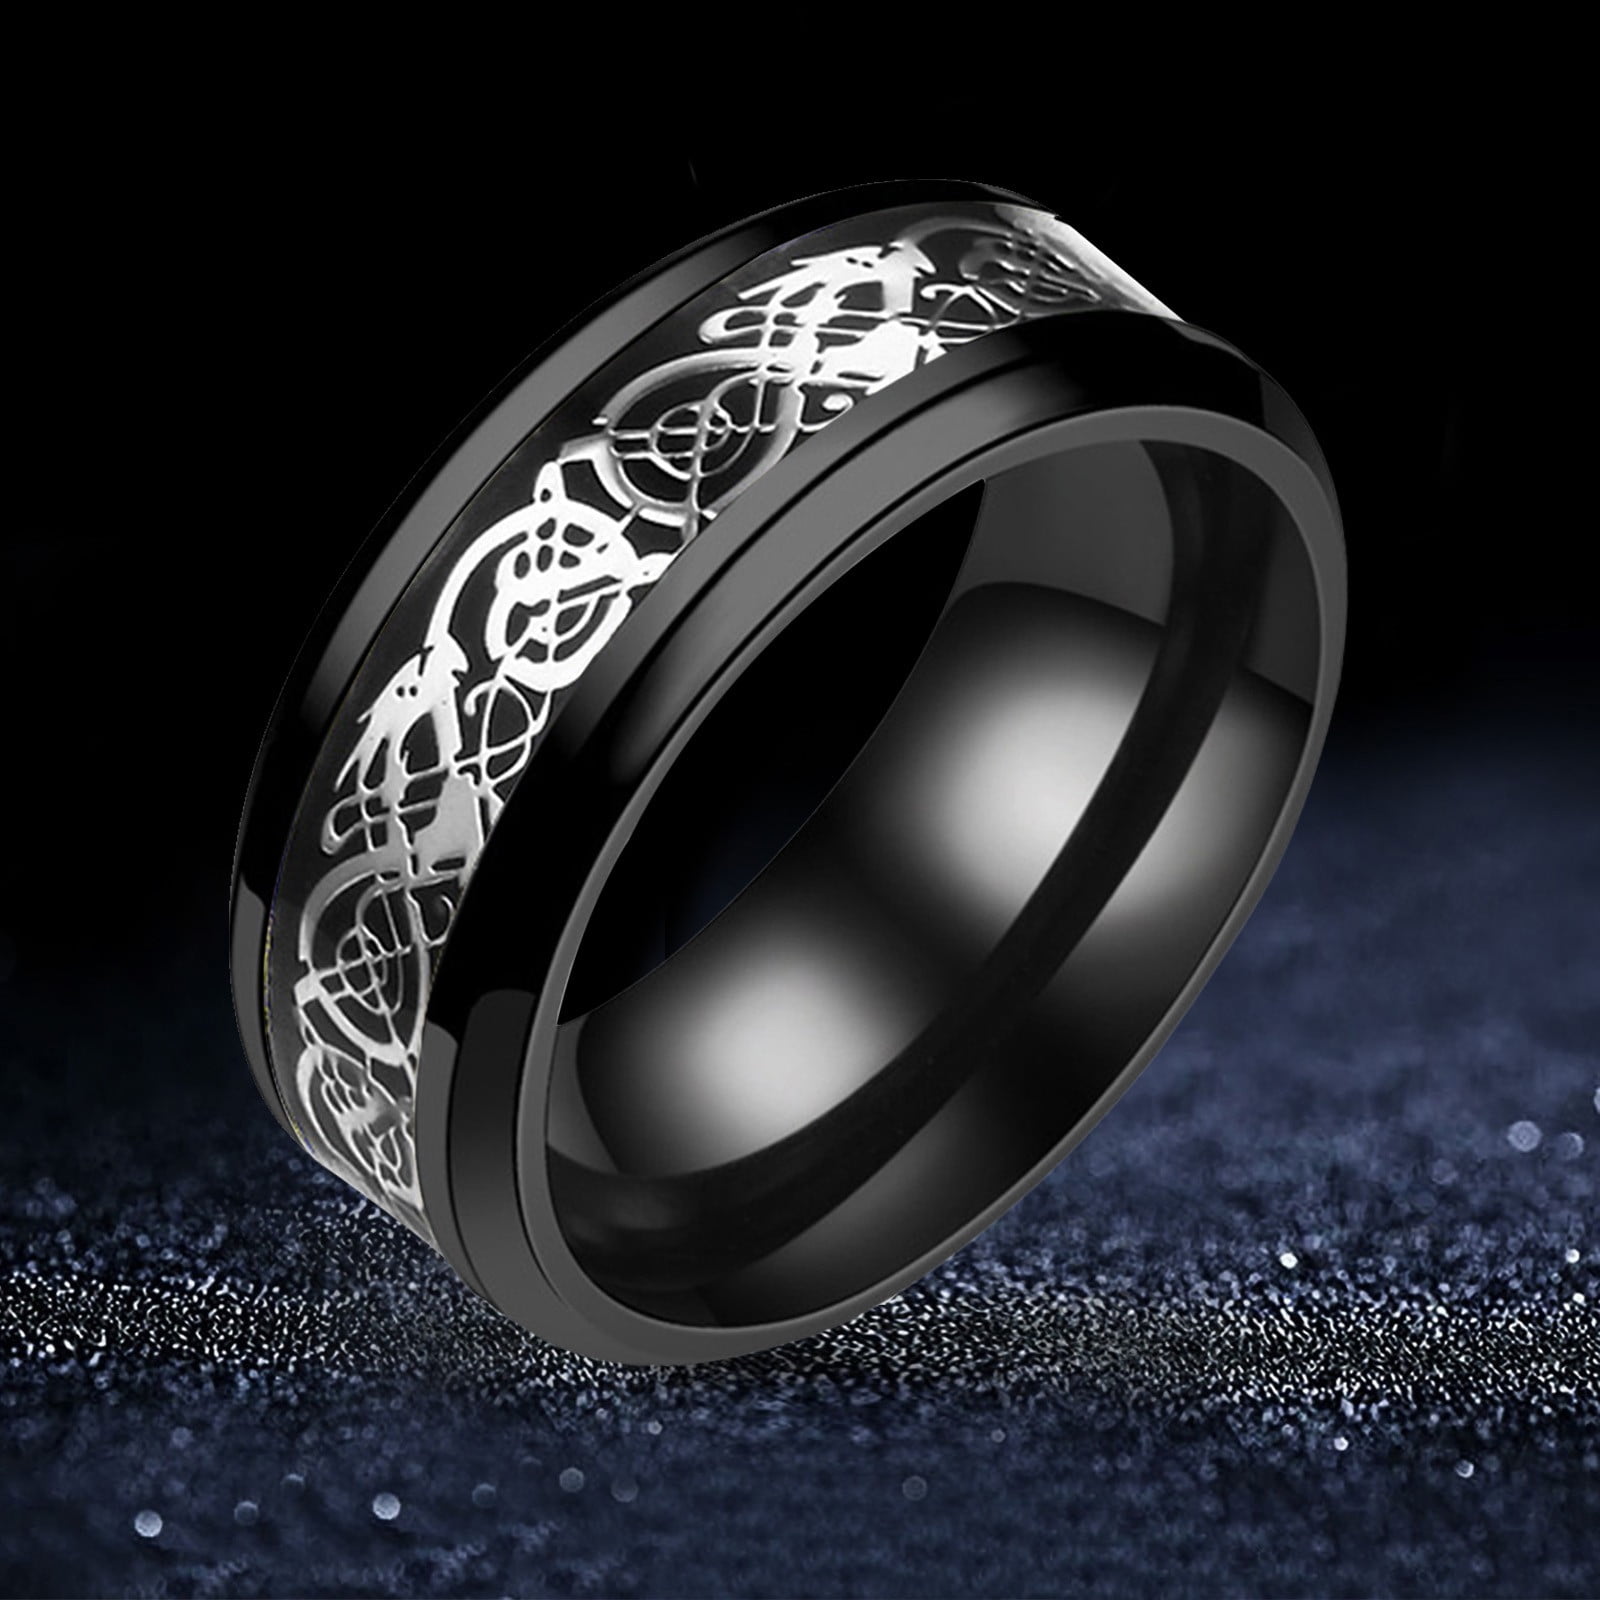 Merlin's Dragon Ring - Emeralds International LLC.